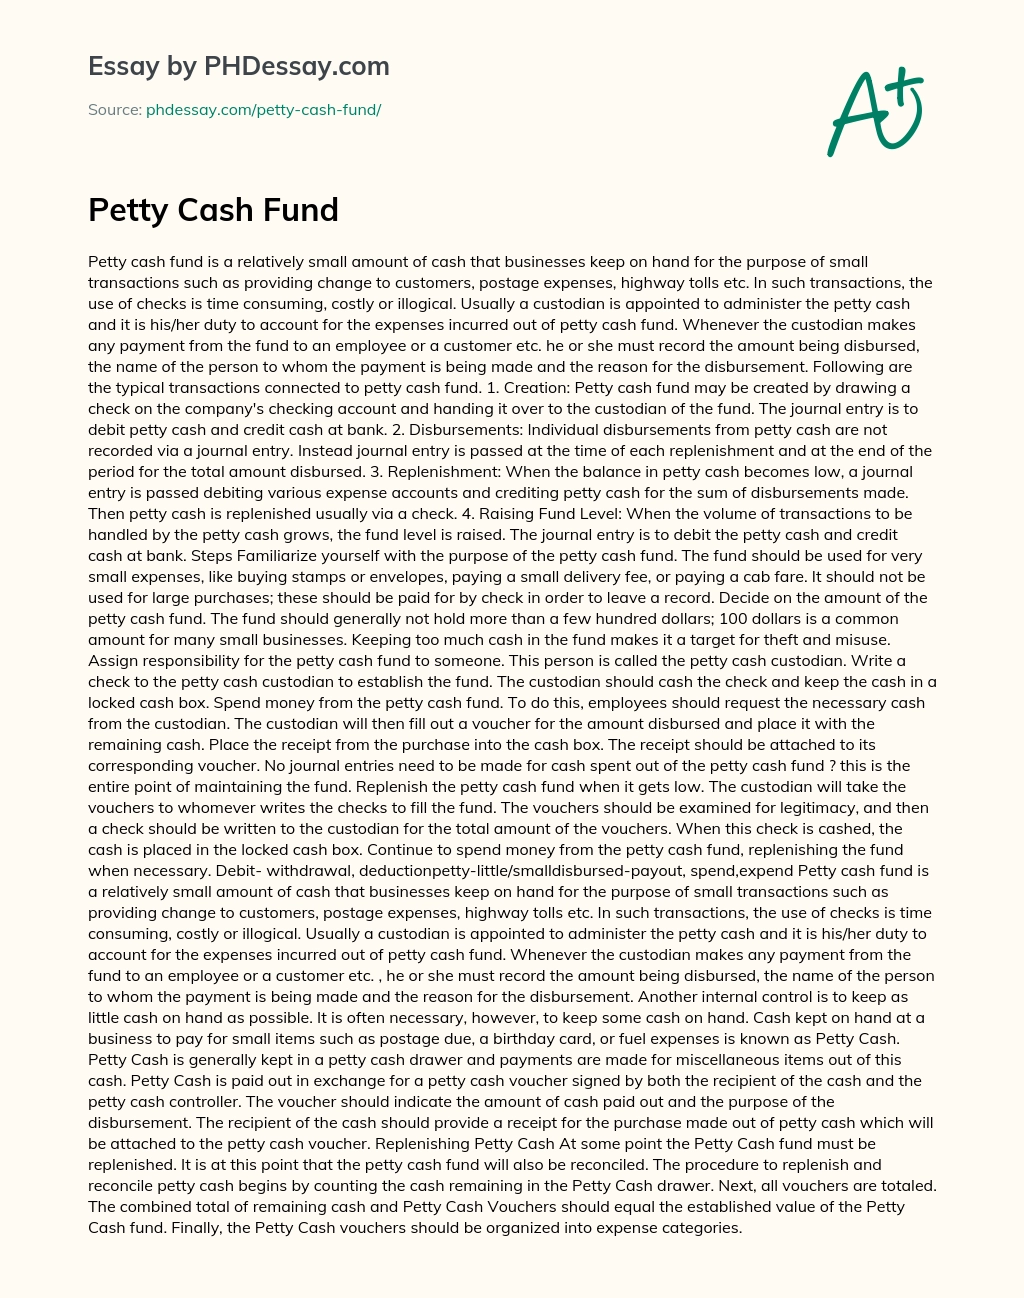 Petty Cash Fund essay